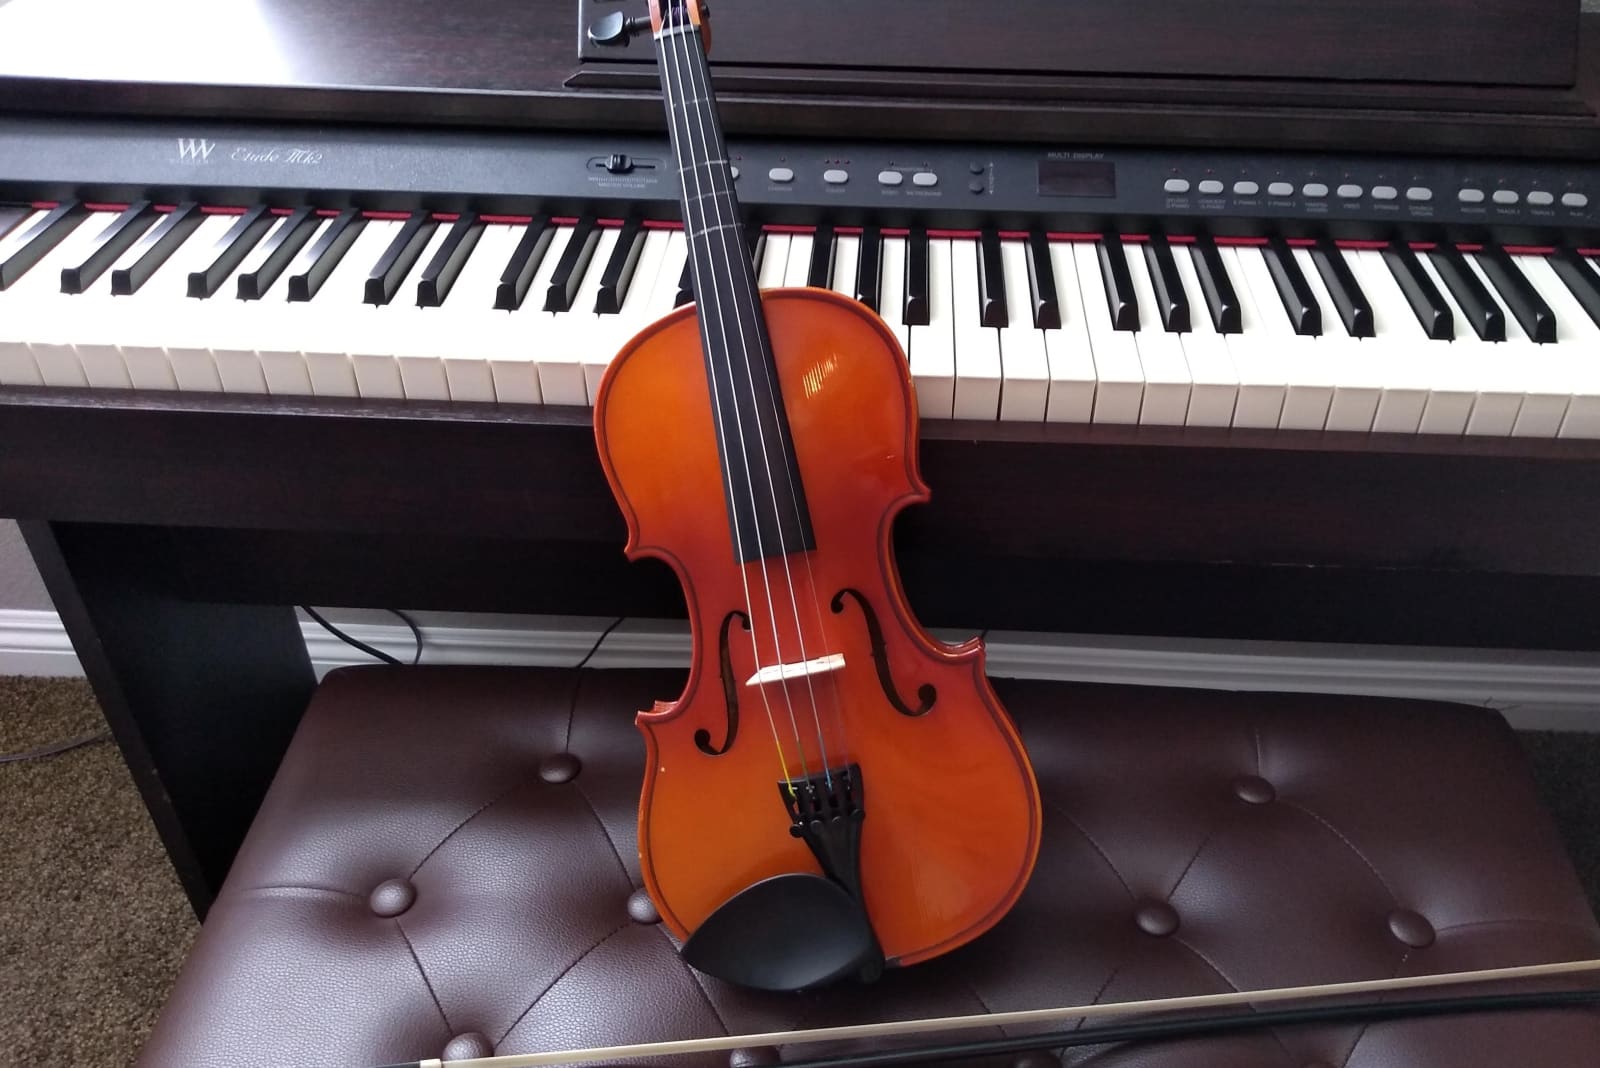 A violin and a piano